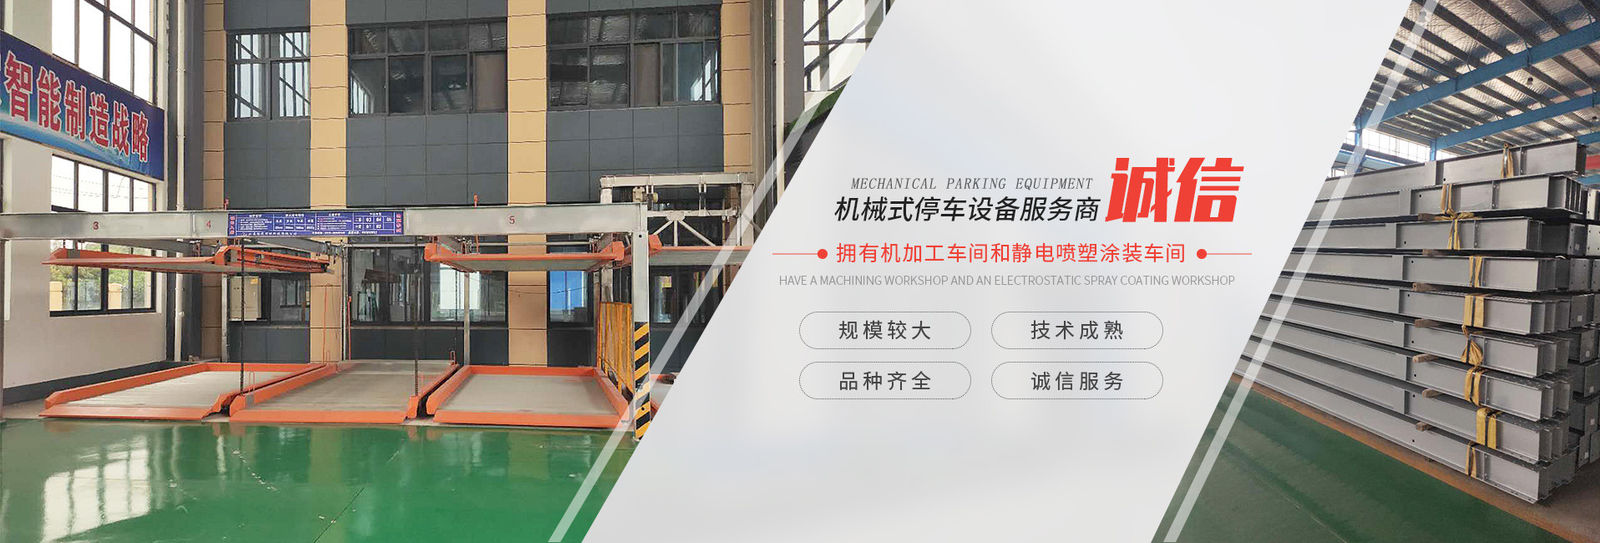 Китай Shanghai Changyue Automation Machinery Co., Ltd. Профиль компании